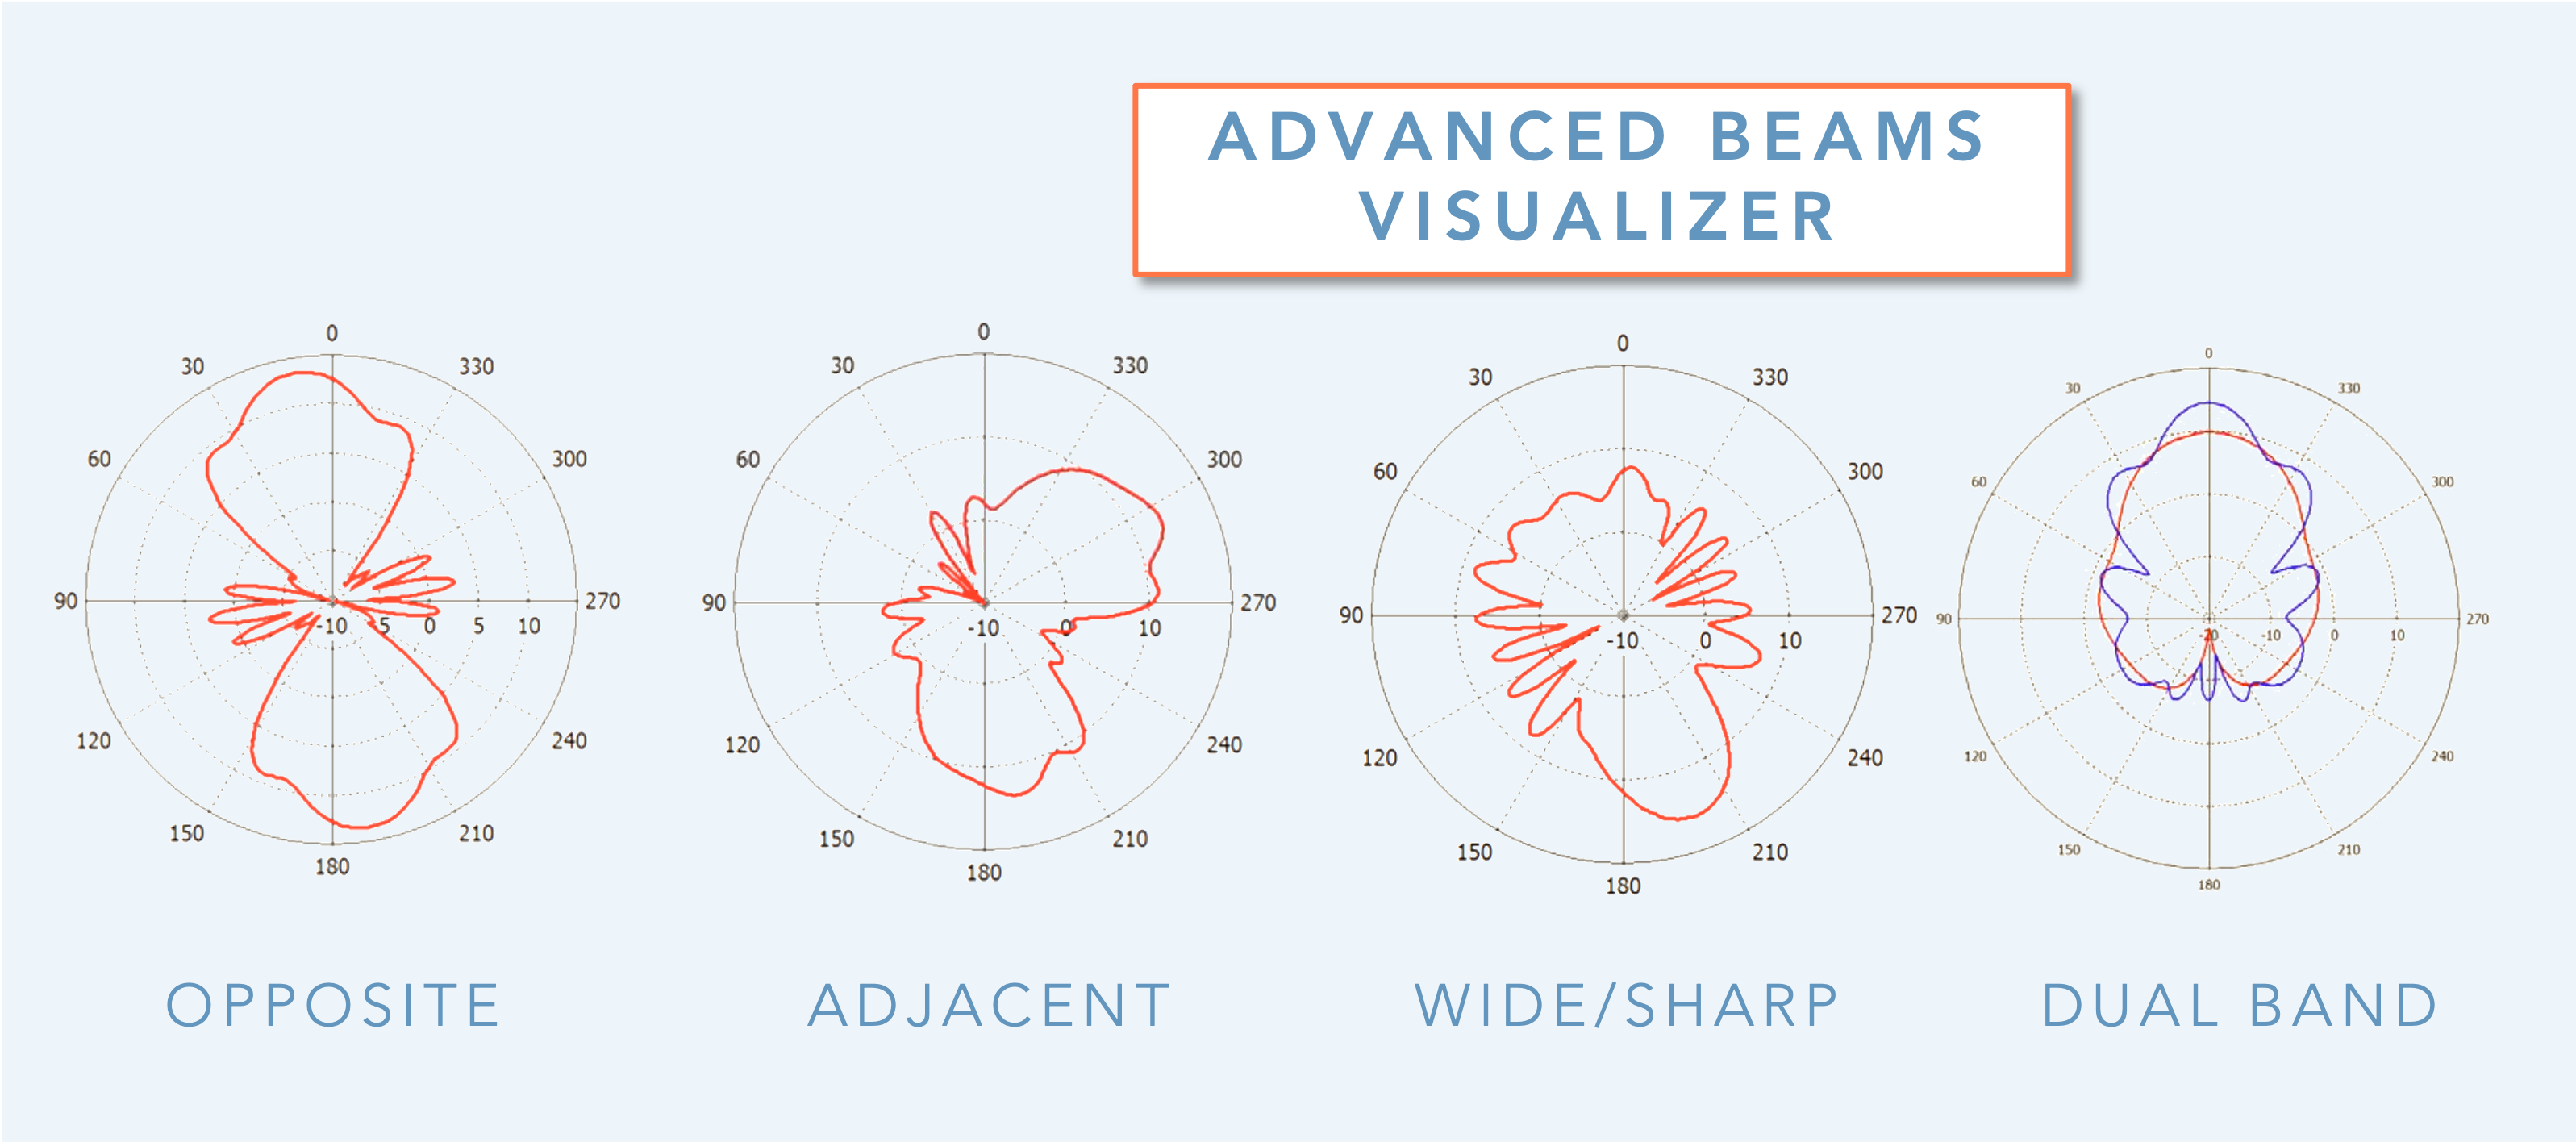 SBA Advanced Beams Visualizer